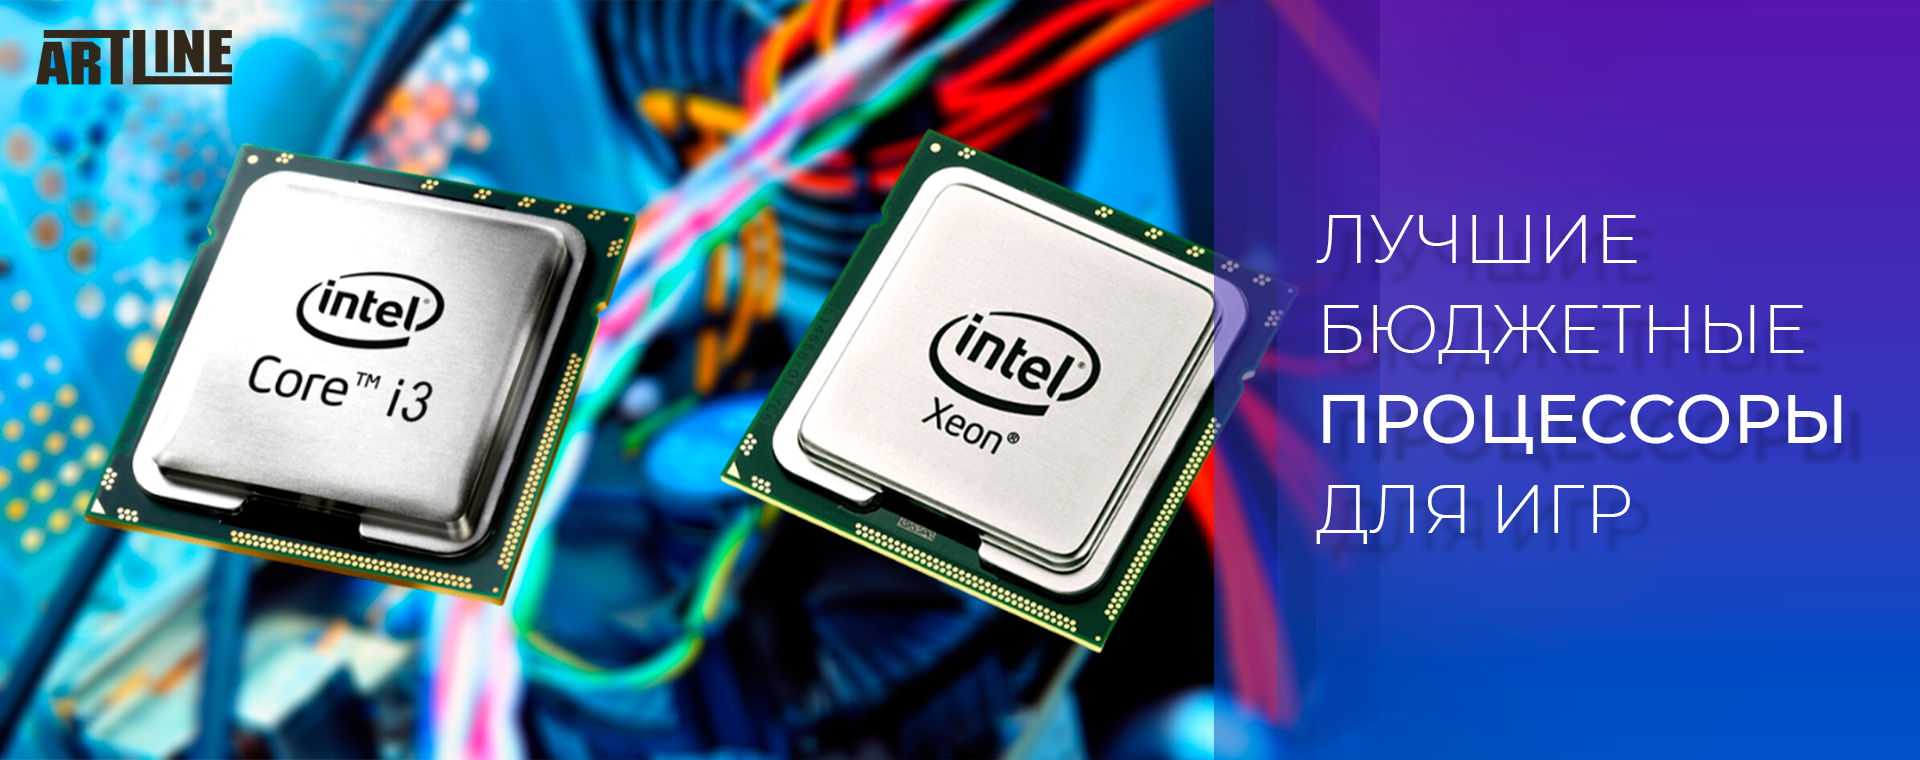 Интел Xeon i. Процессор Intel Core Xeon. Intel Xeon Platinum 8375c. Процессор Intel Xeon 4310.